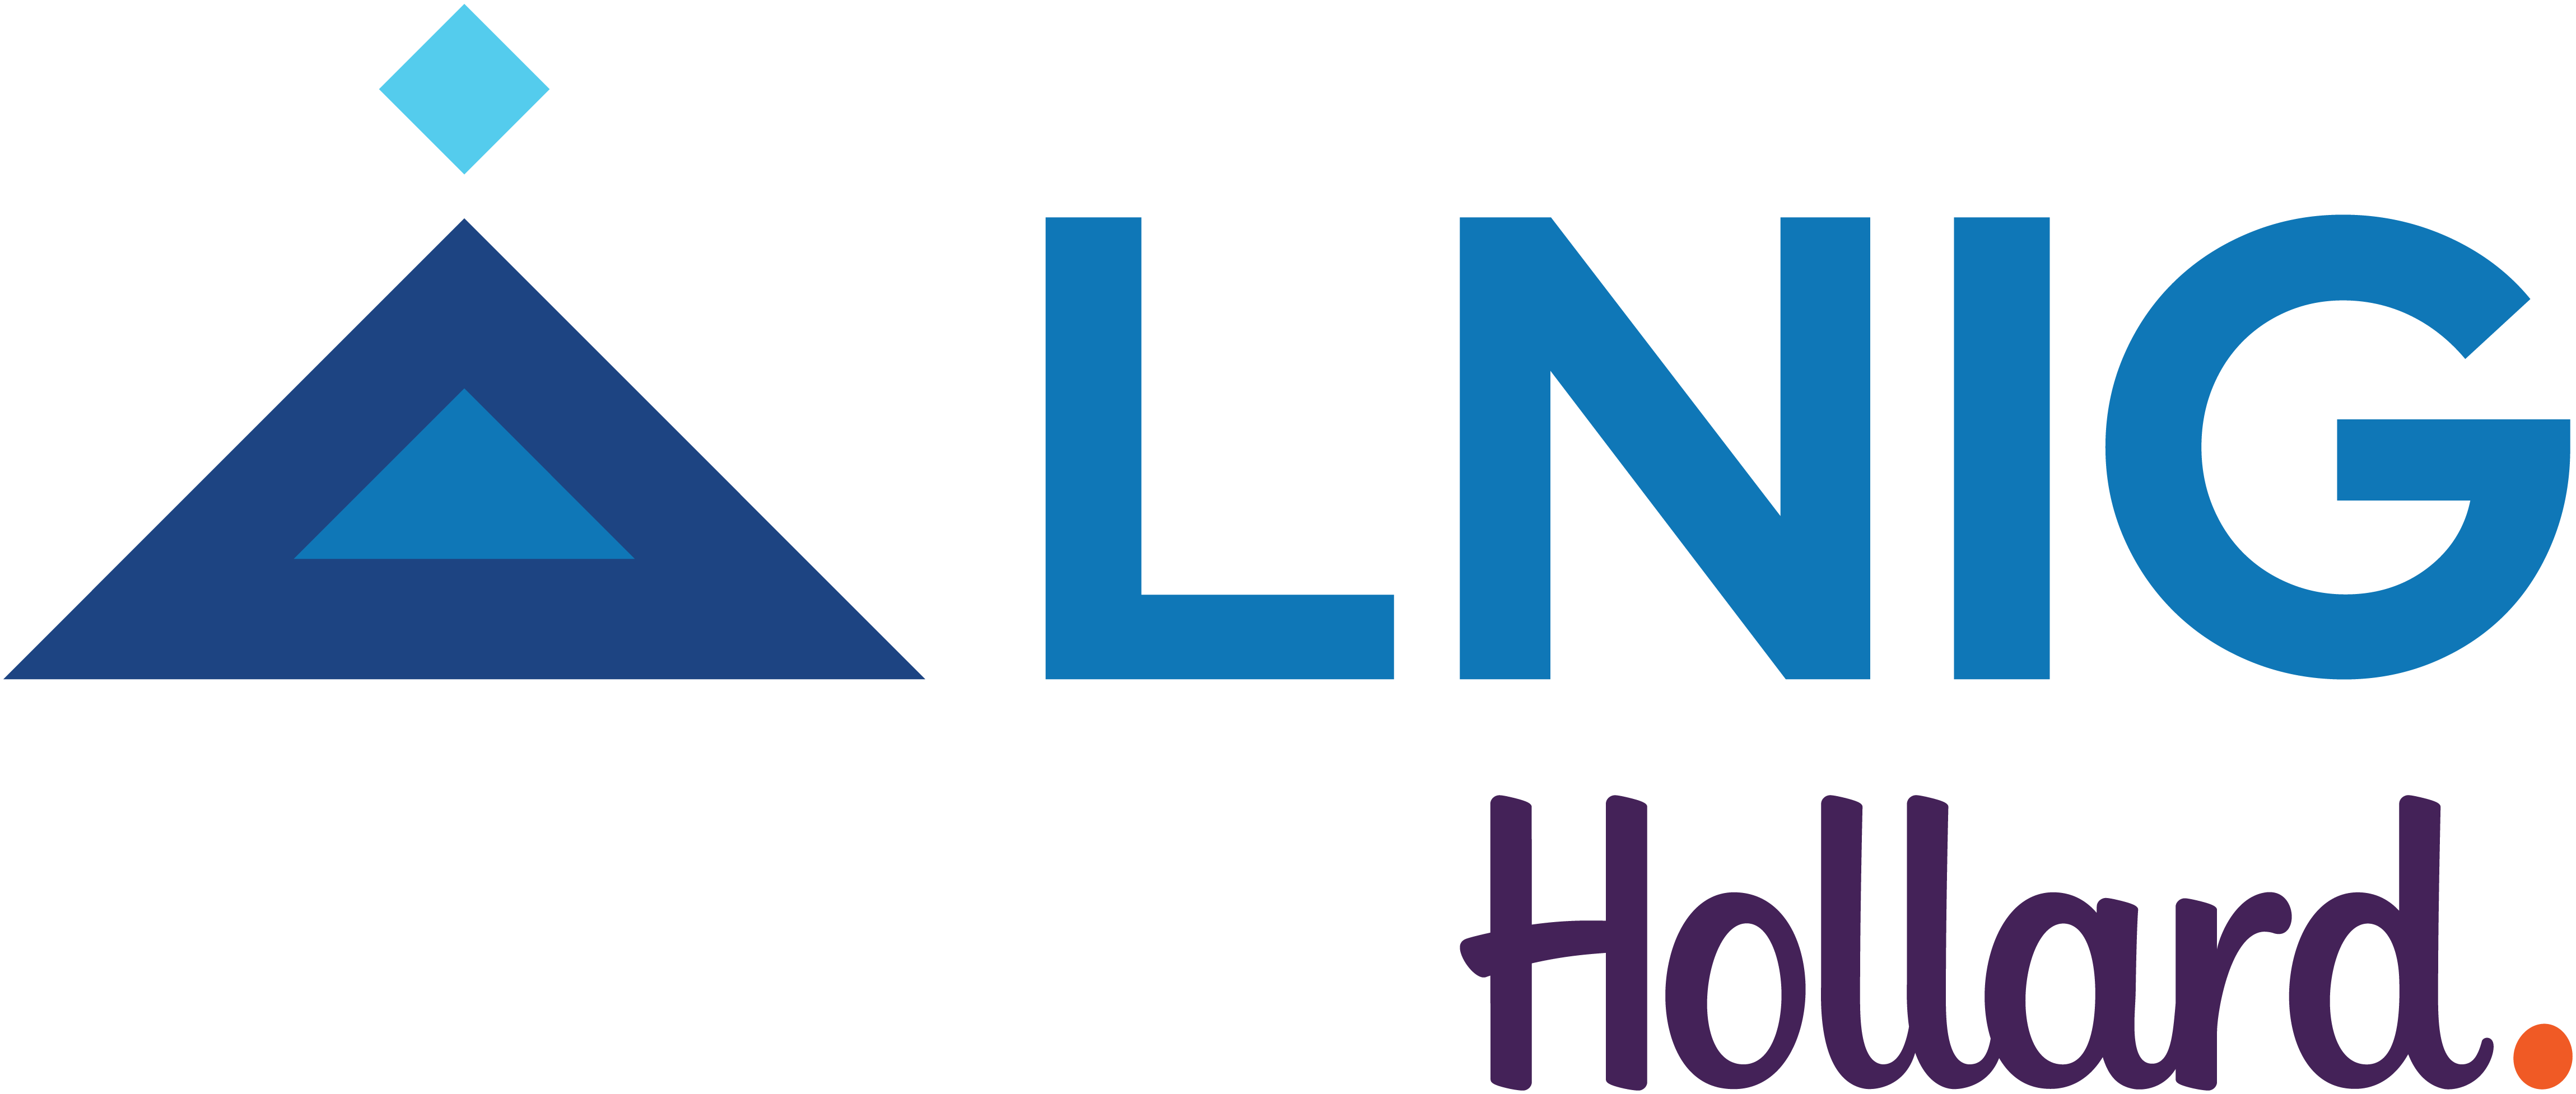 A hollard logo